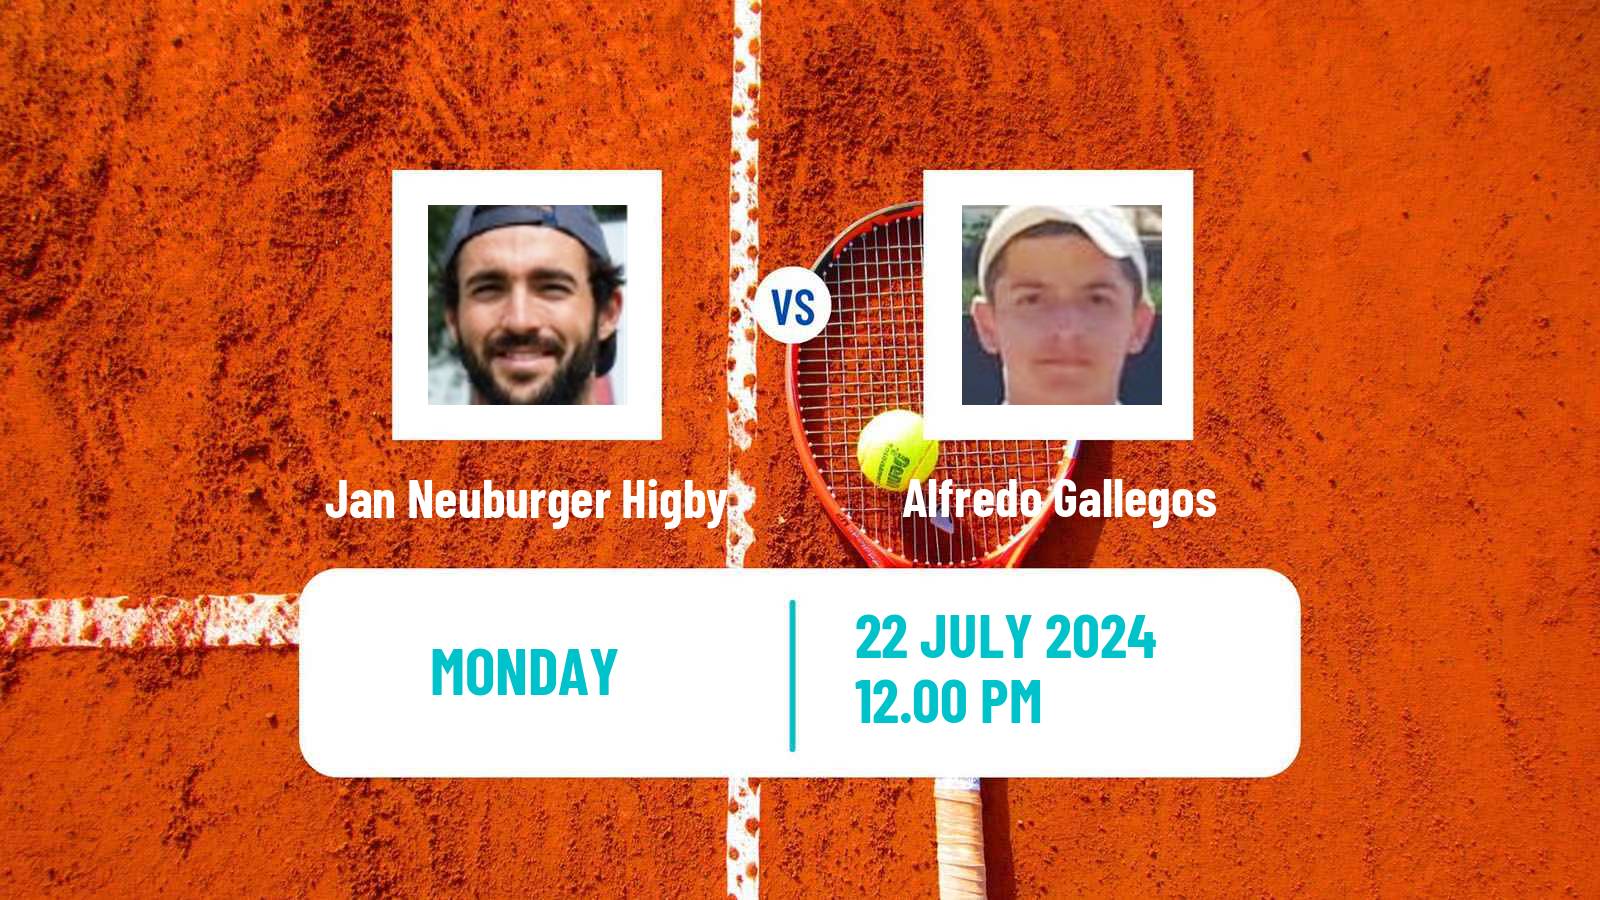 Tennis Davis Cup Group IV Jan Neuburger Higby - Alfredo Gallegos